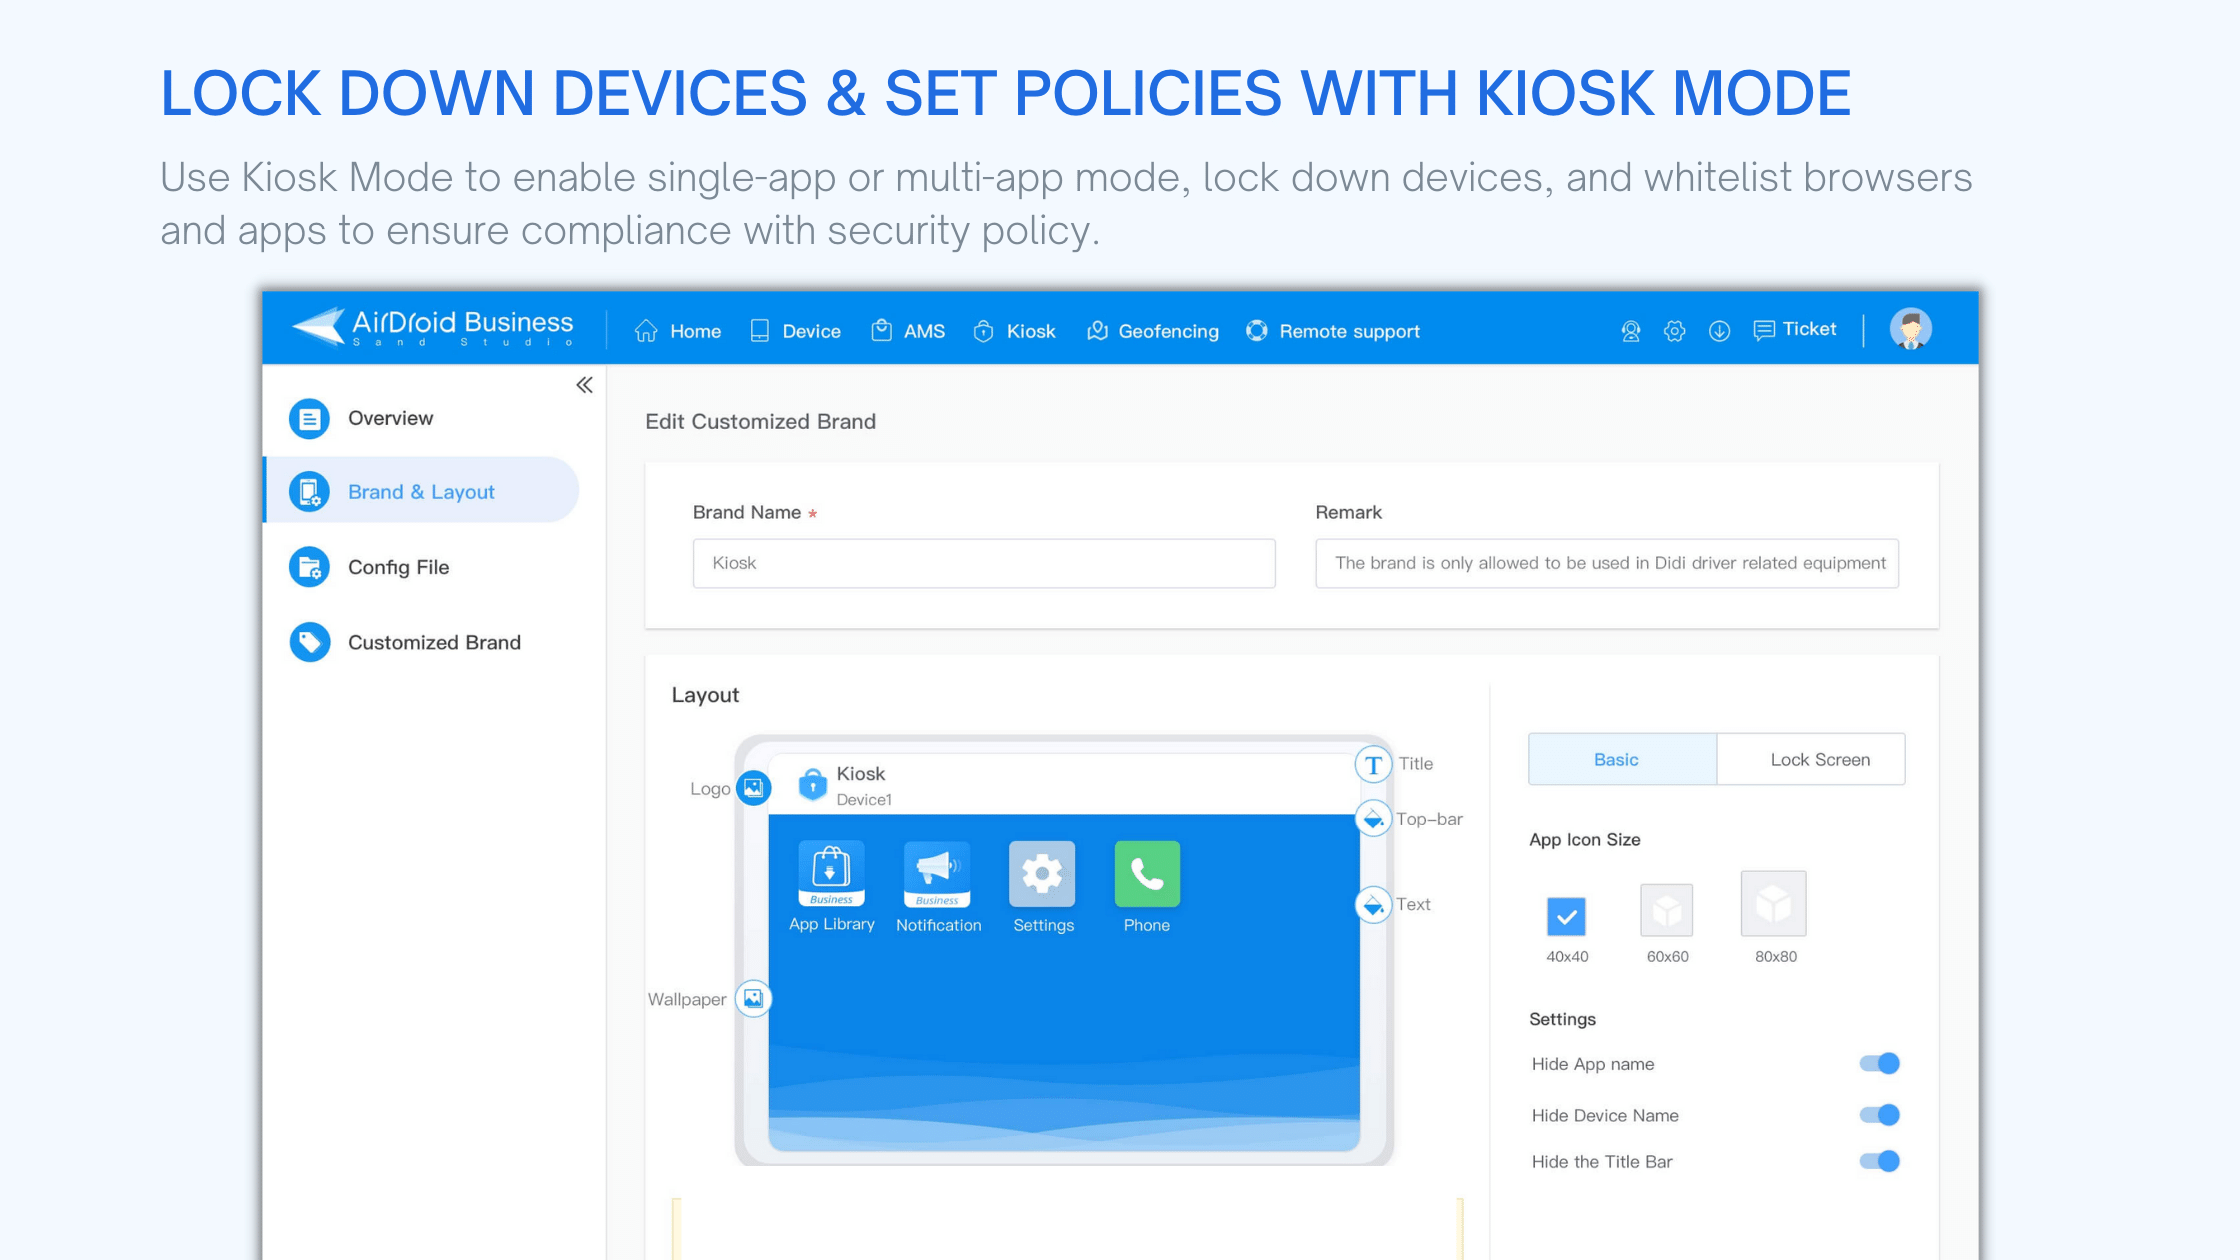 AirDroid Business Kiosk Mode offers device lockdown, single-app & multi-app mode, website & app whitelisting, and